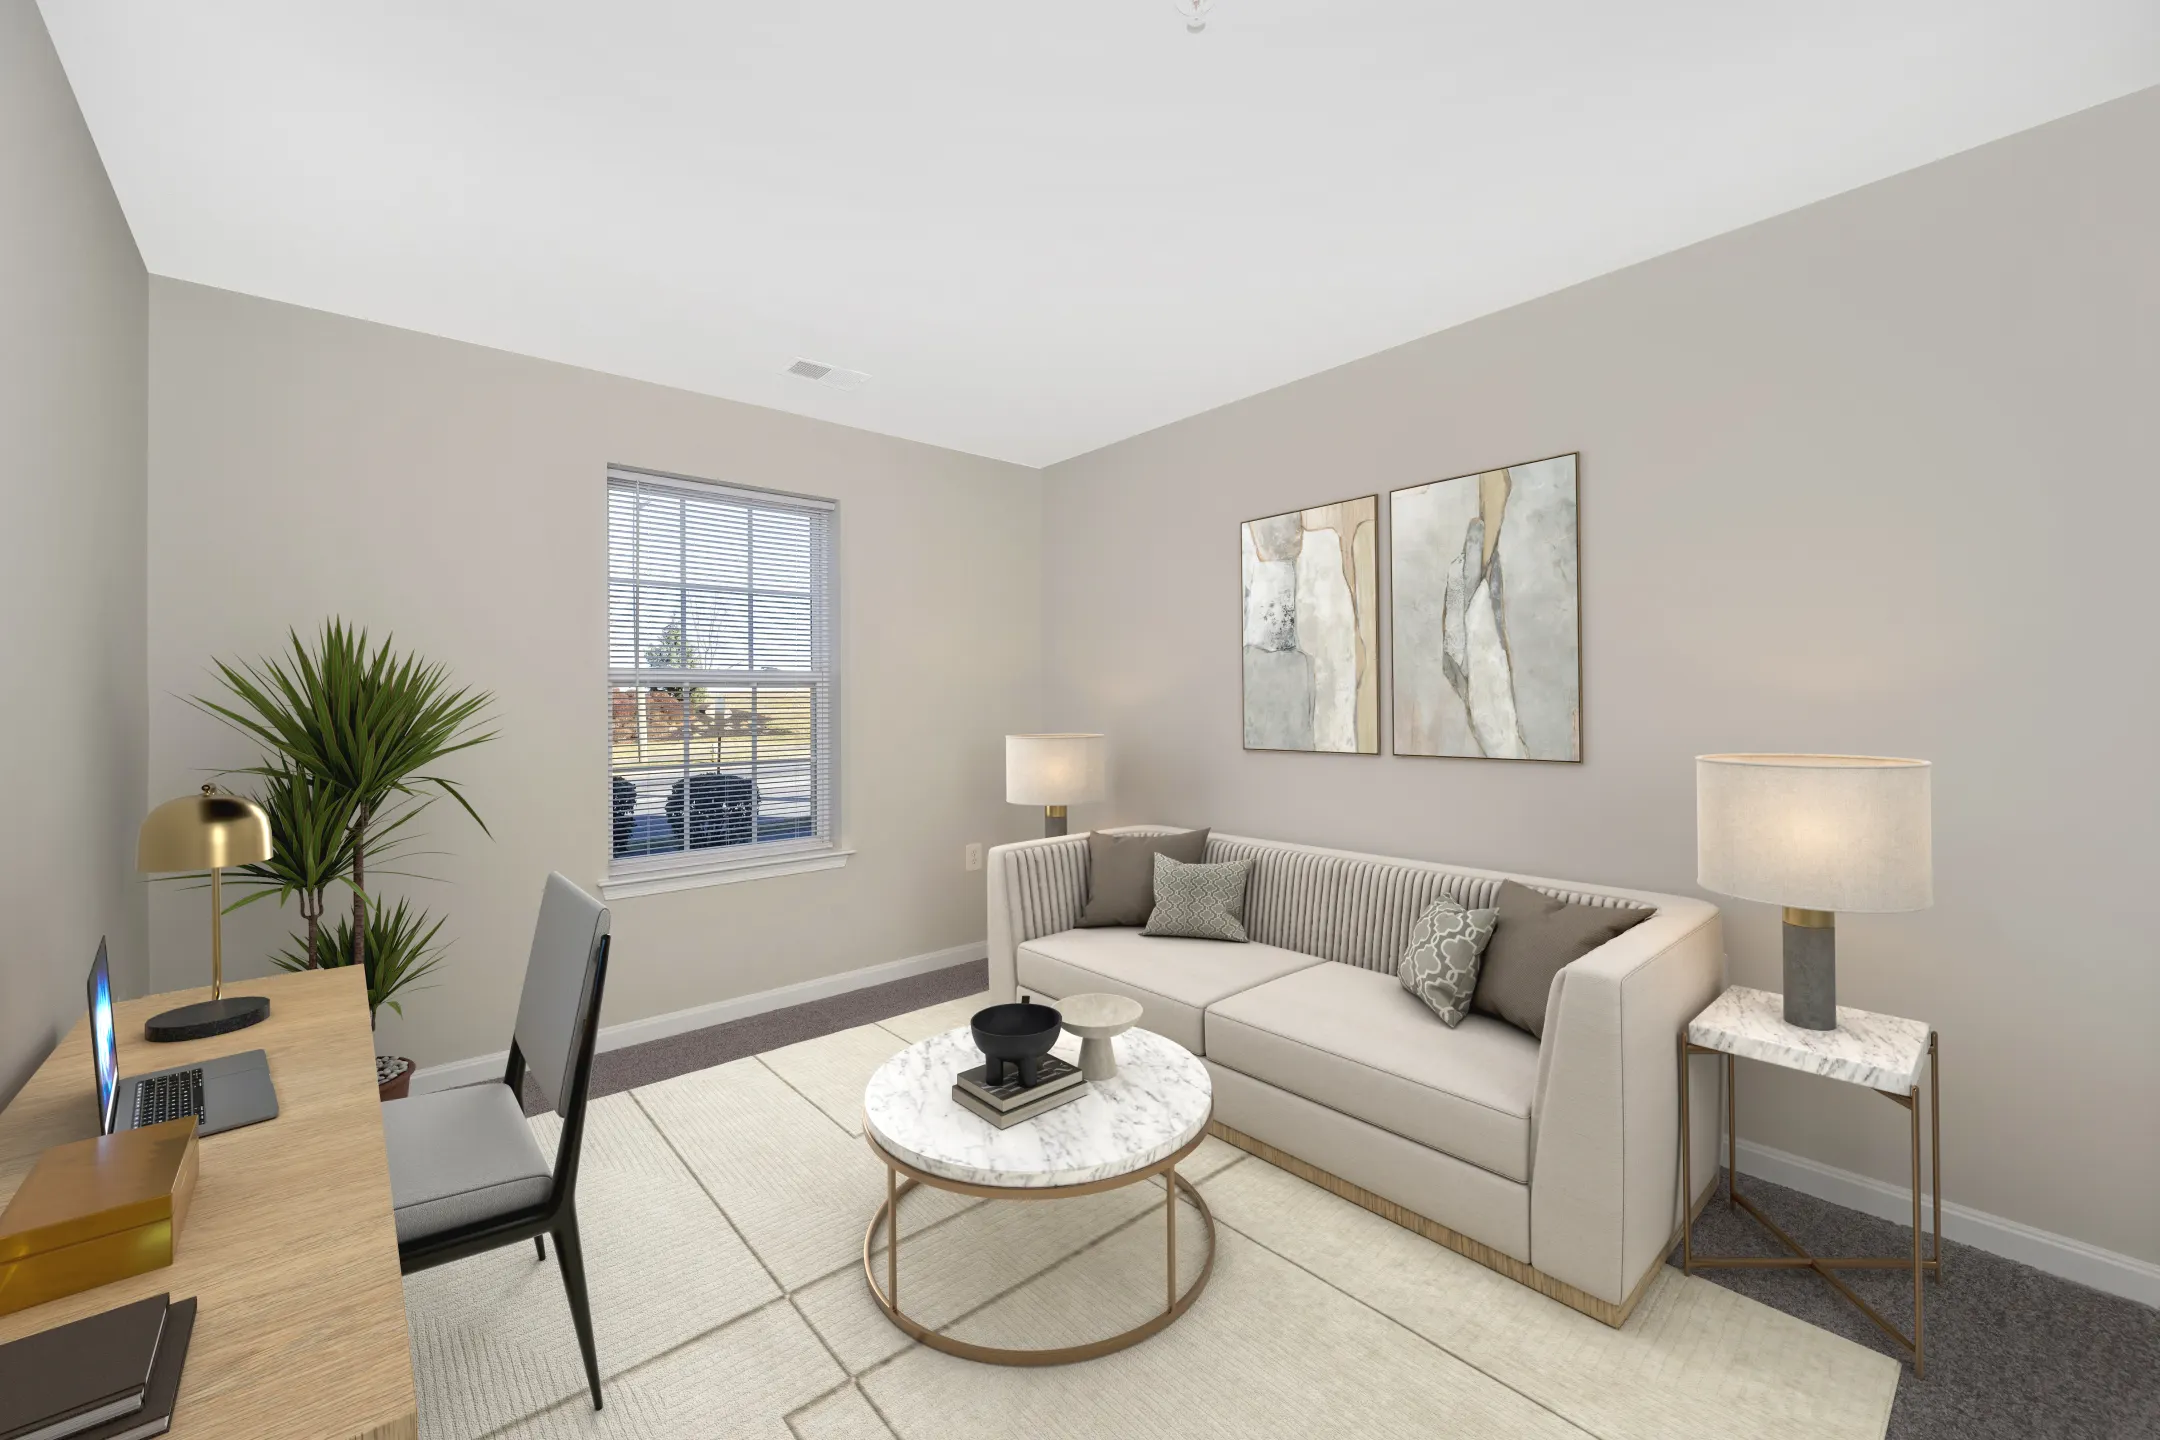 Living Room - Fairway Vista Apartments - Frederick, MD